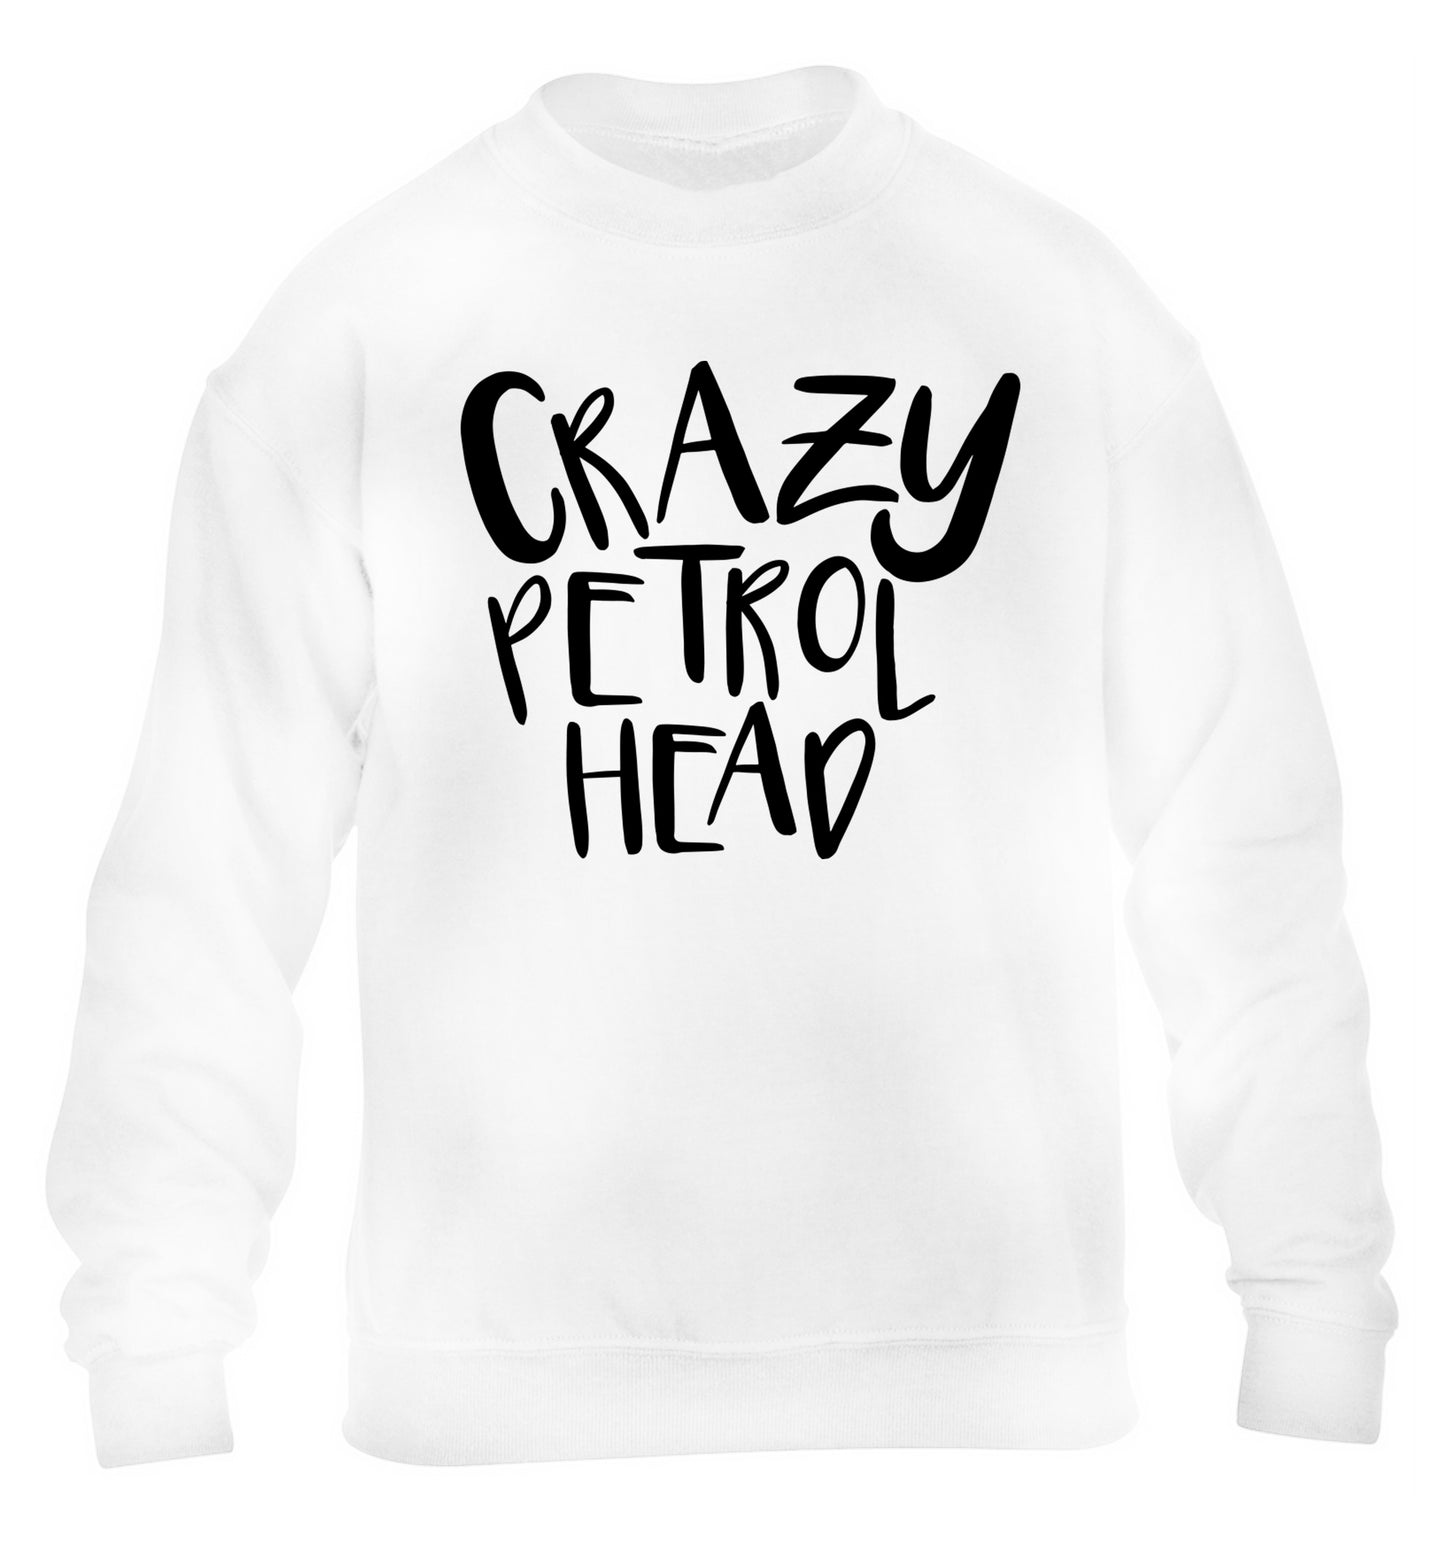 Crazy petrol head children's white sweater 12-13 Years